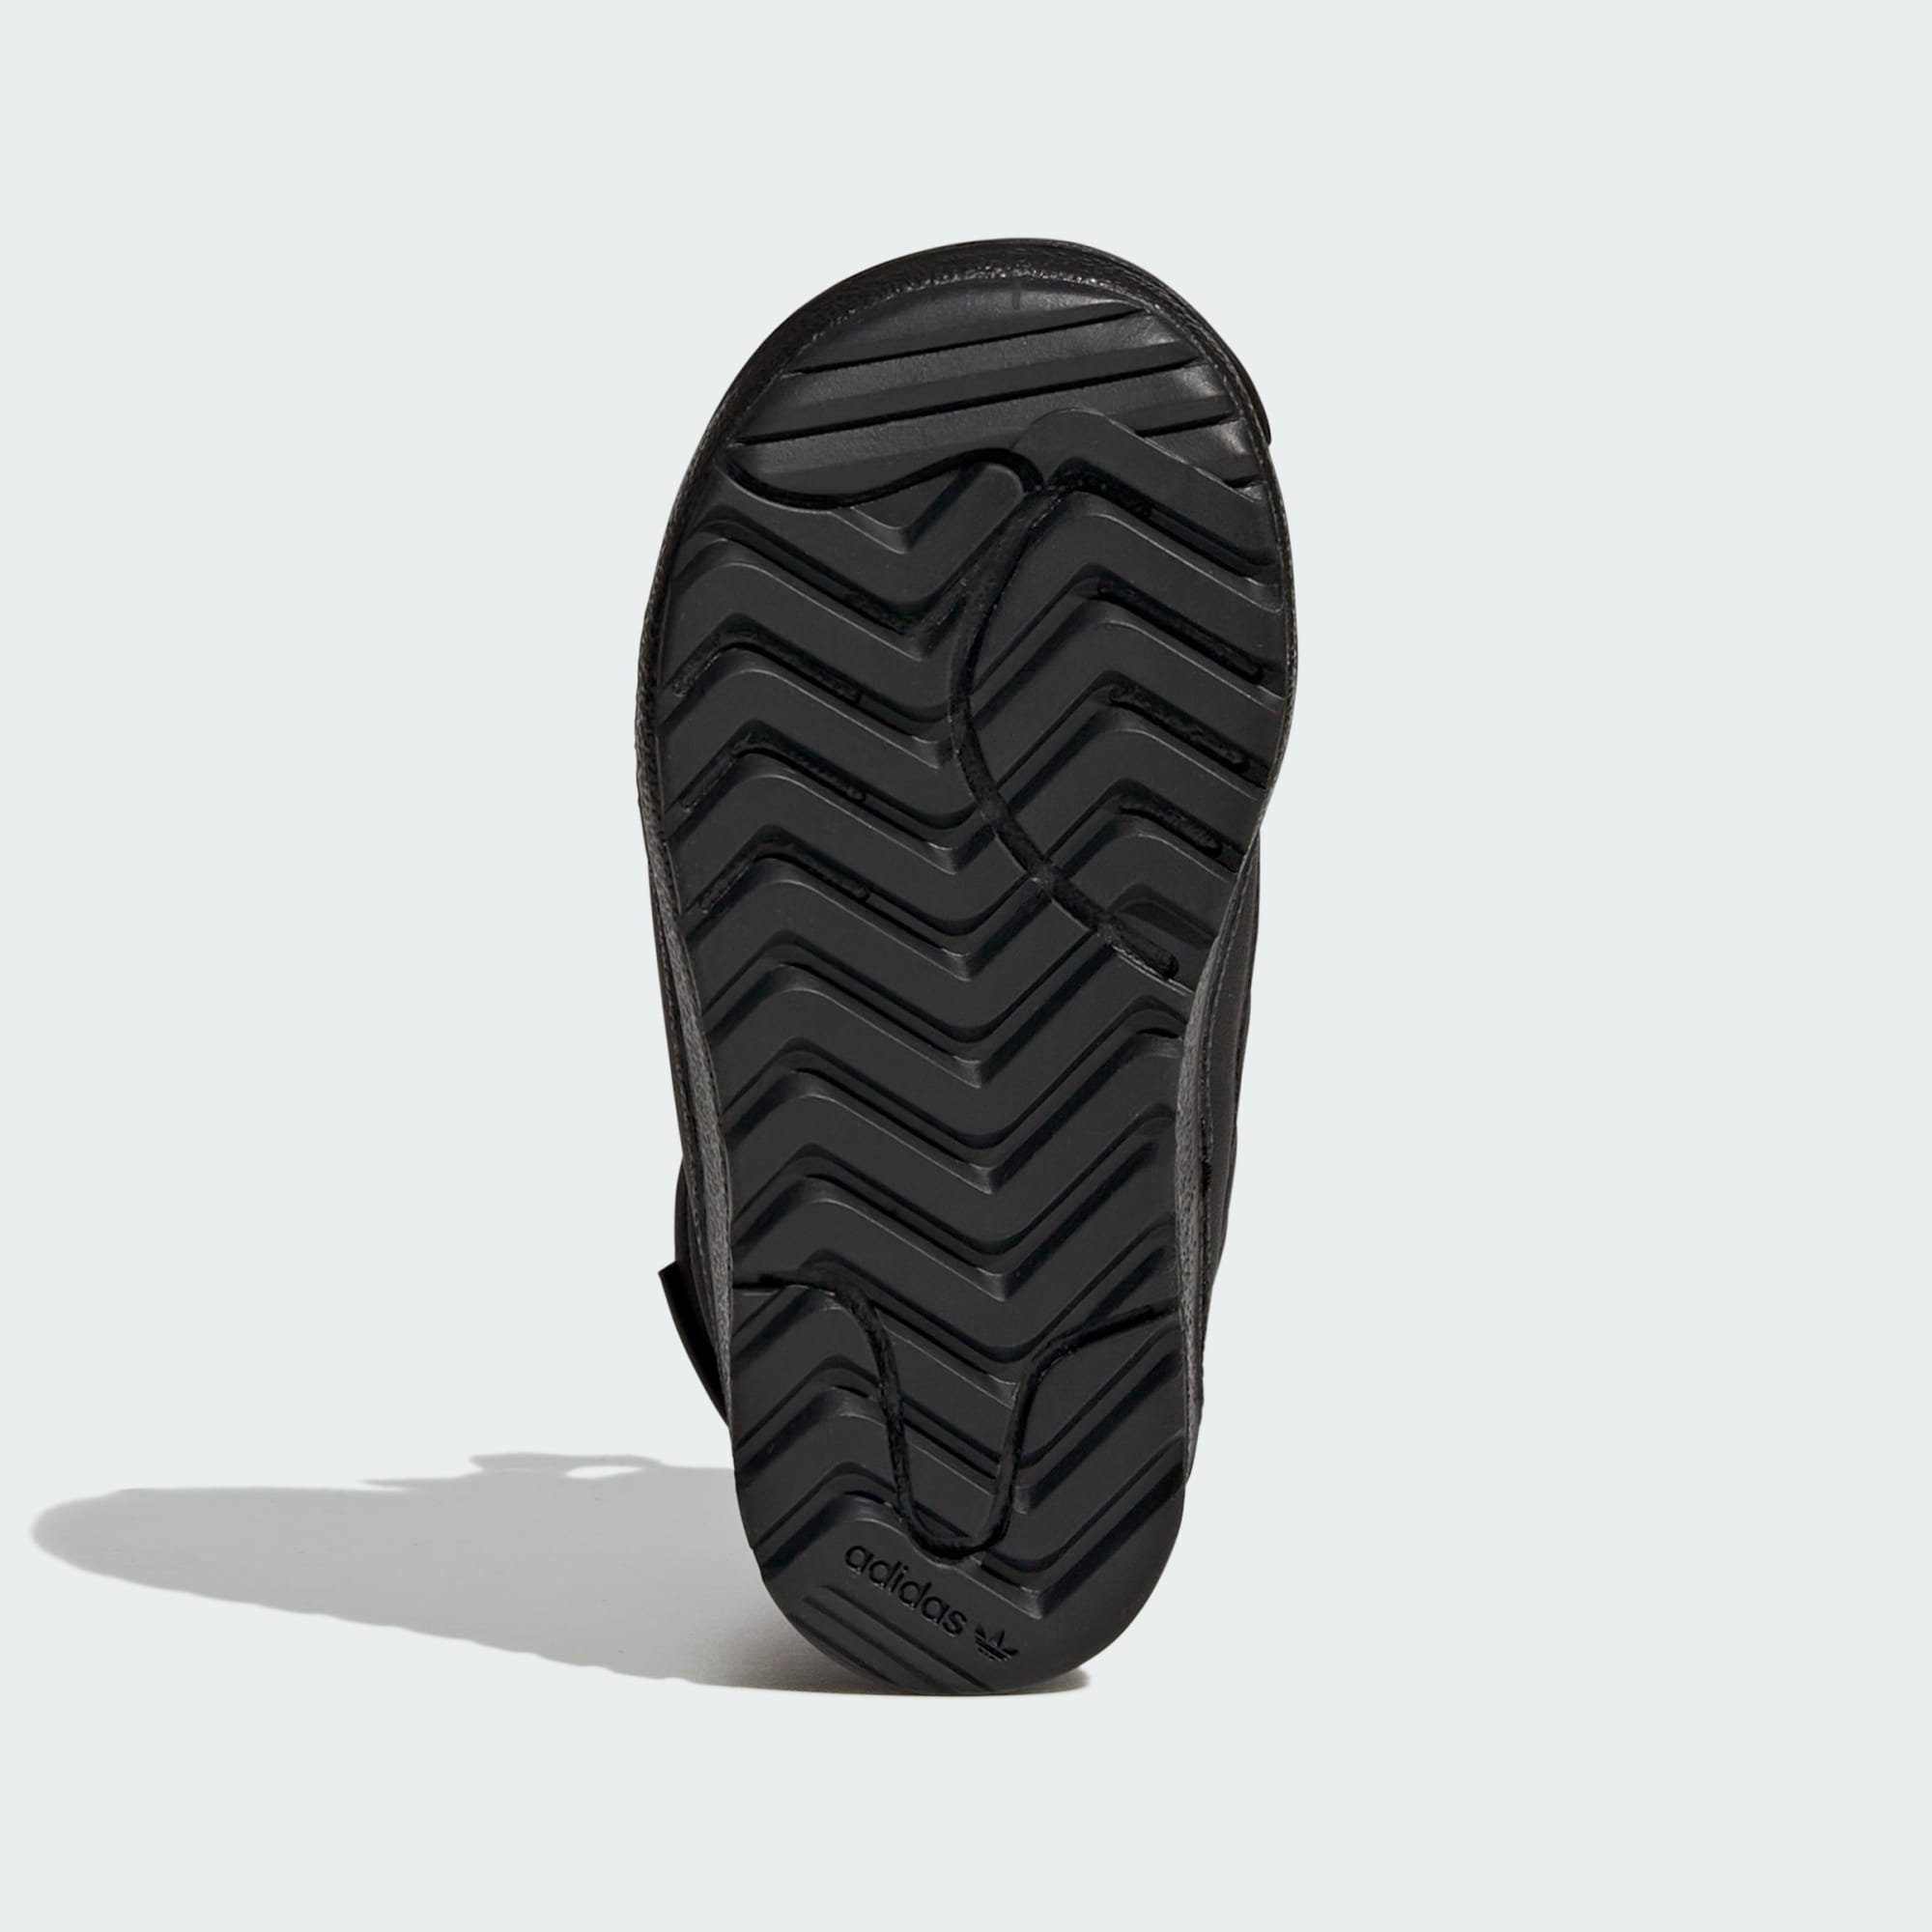 Black STIEFEL / 360 Core Black Sneaker Core Originals KIDS / adidas SUPERSTAR Core Black